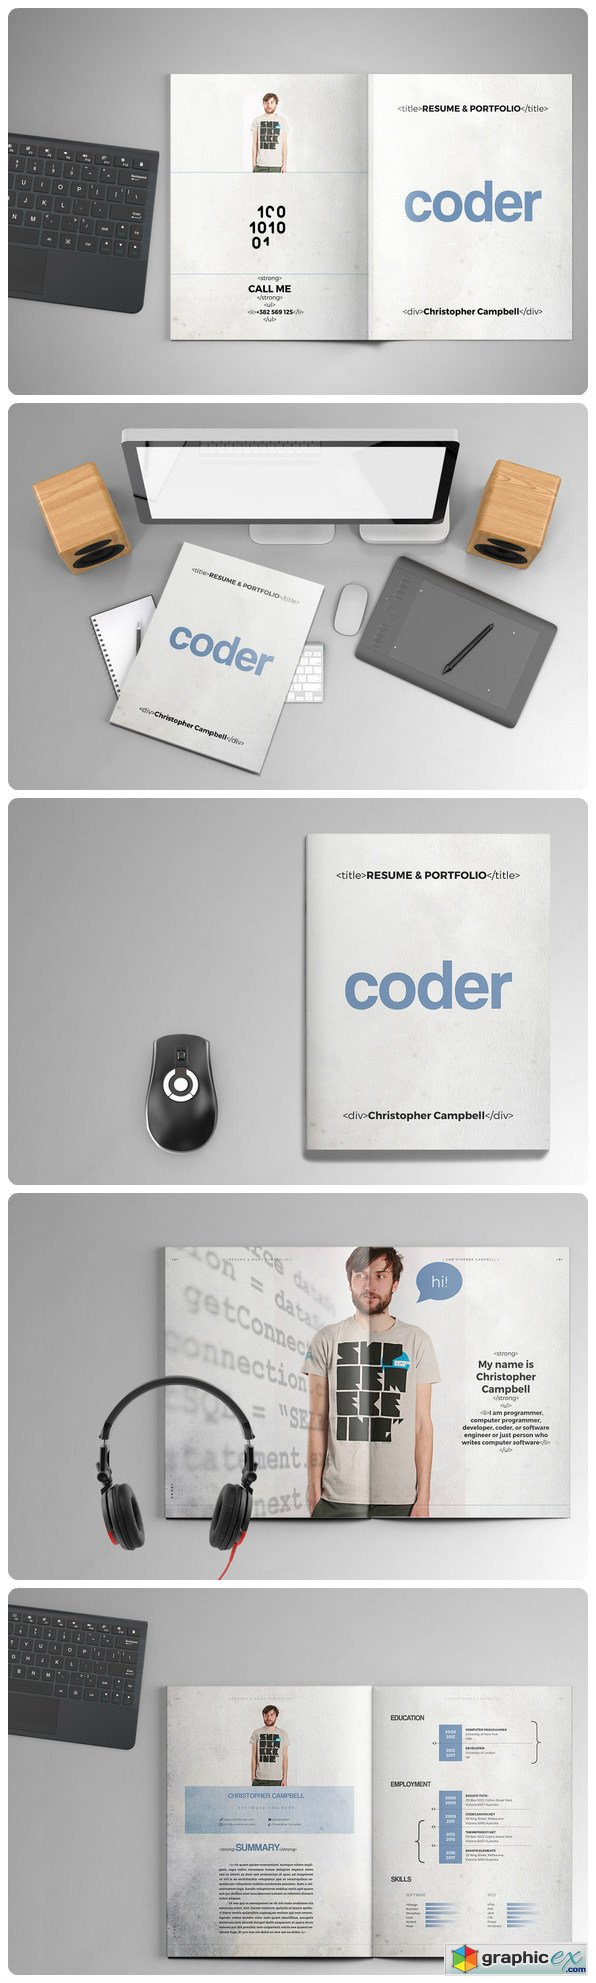 Coder - Portfolio and Resume